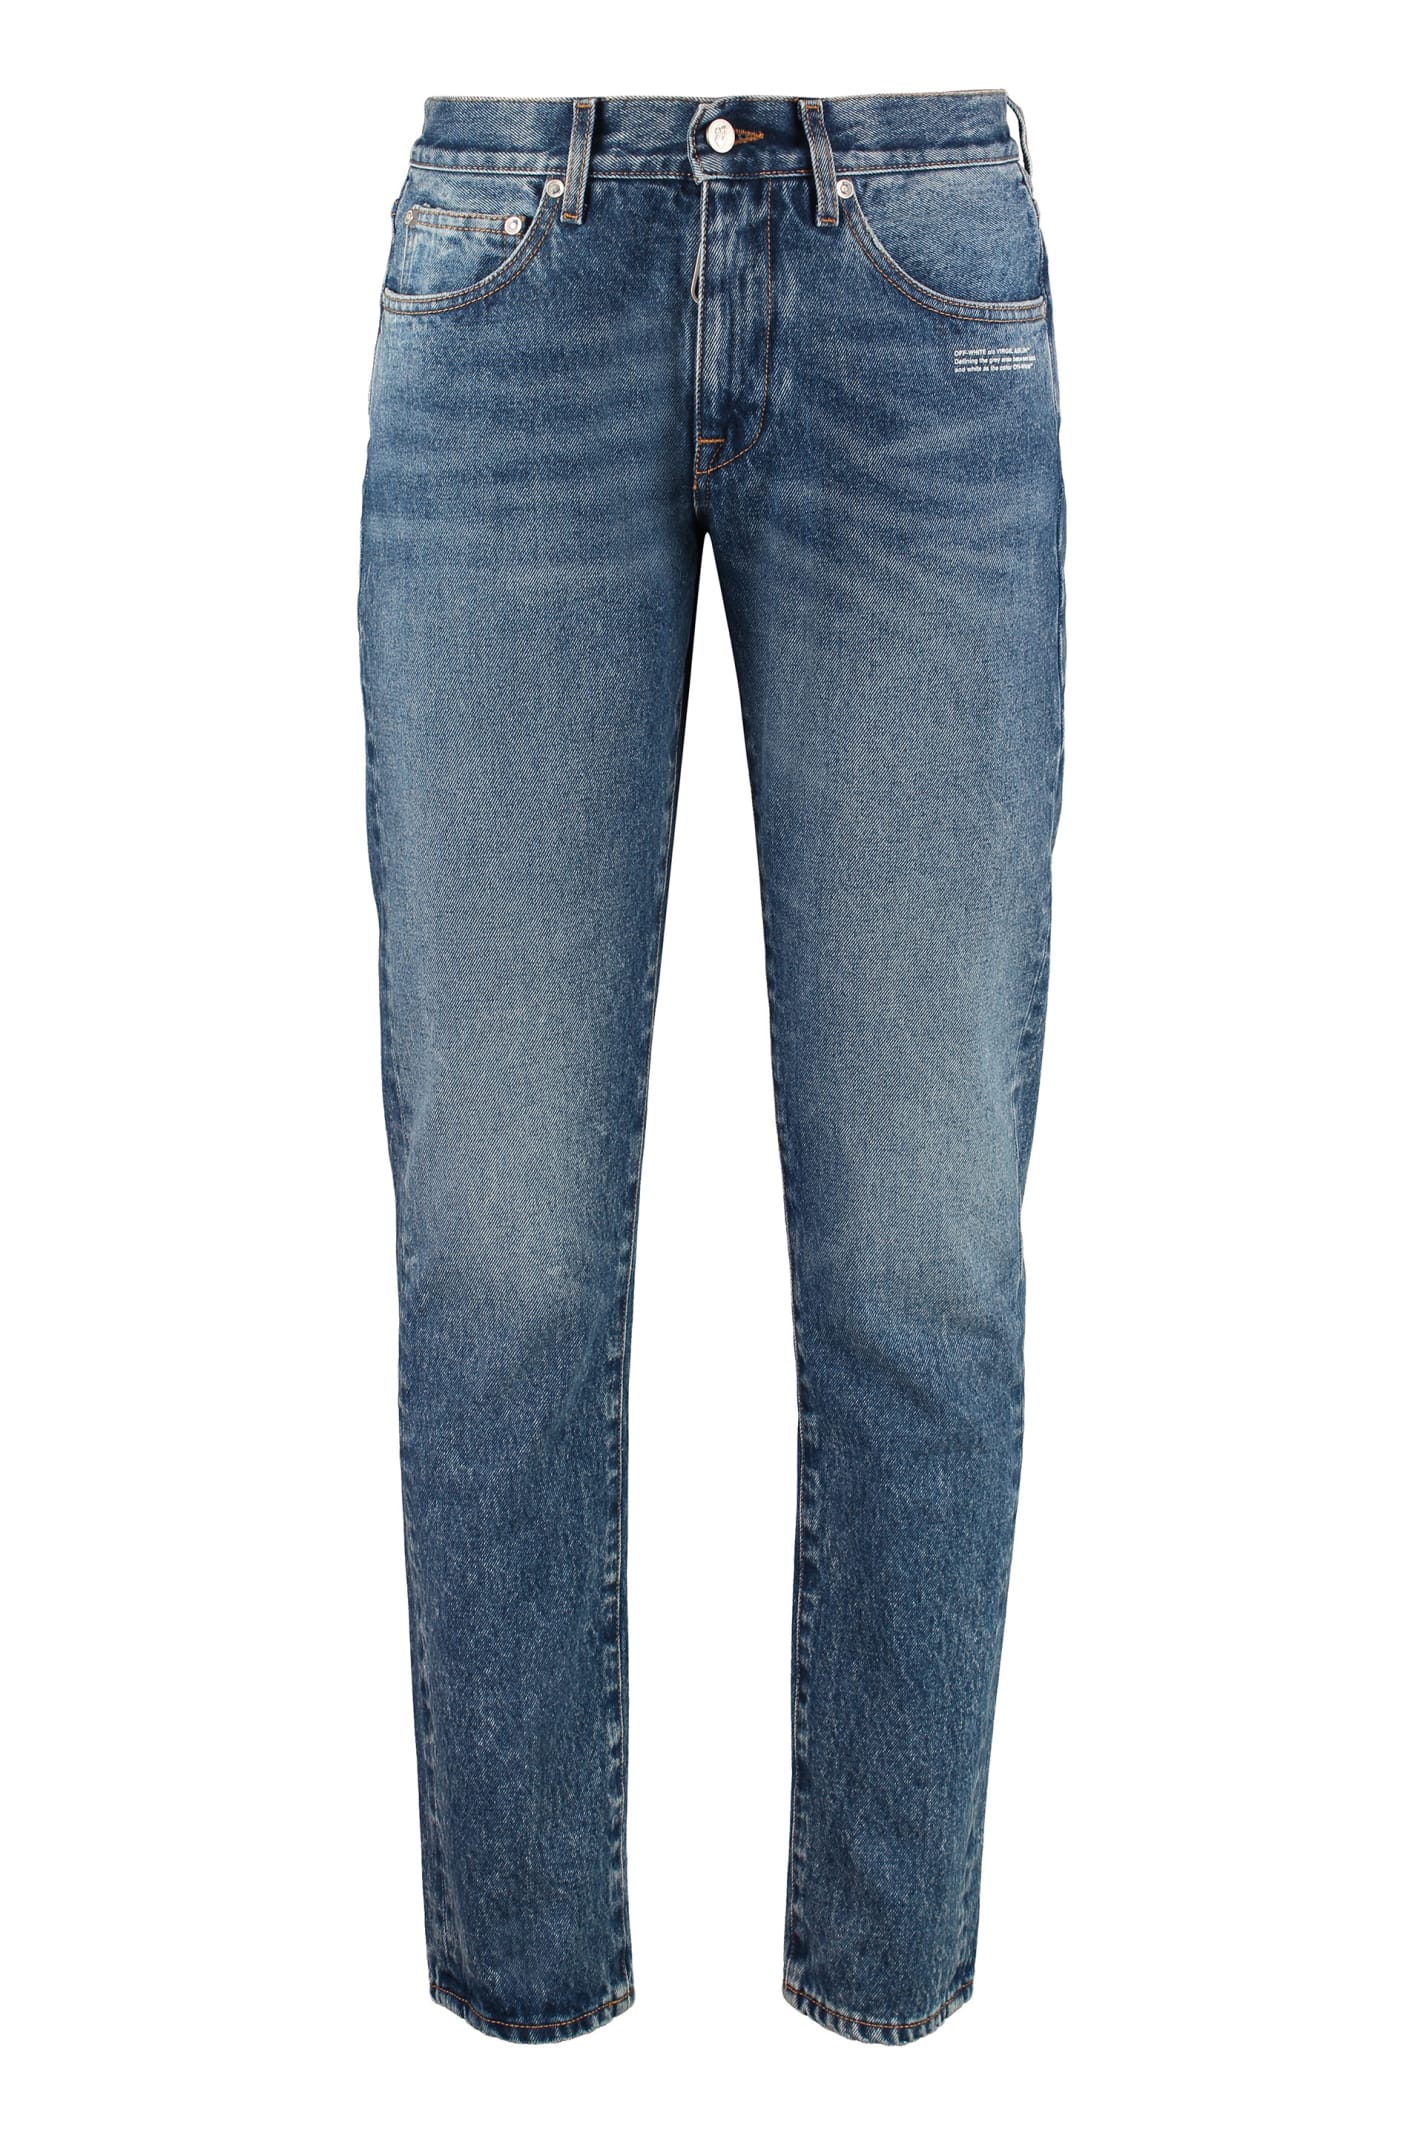 Off-White 5-pocket Jeans